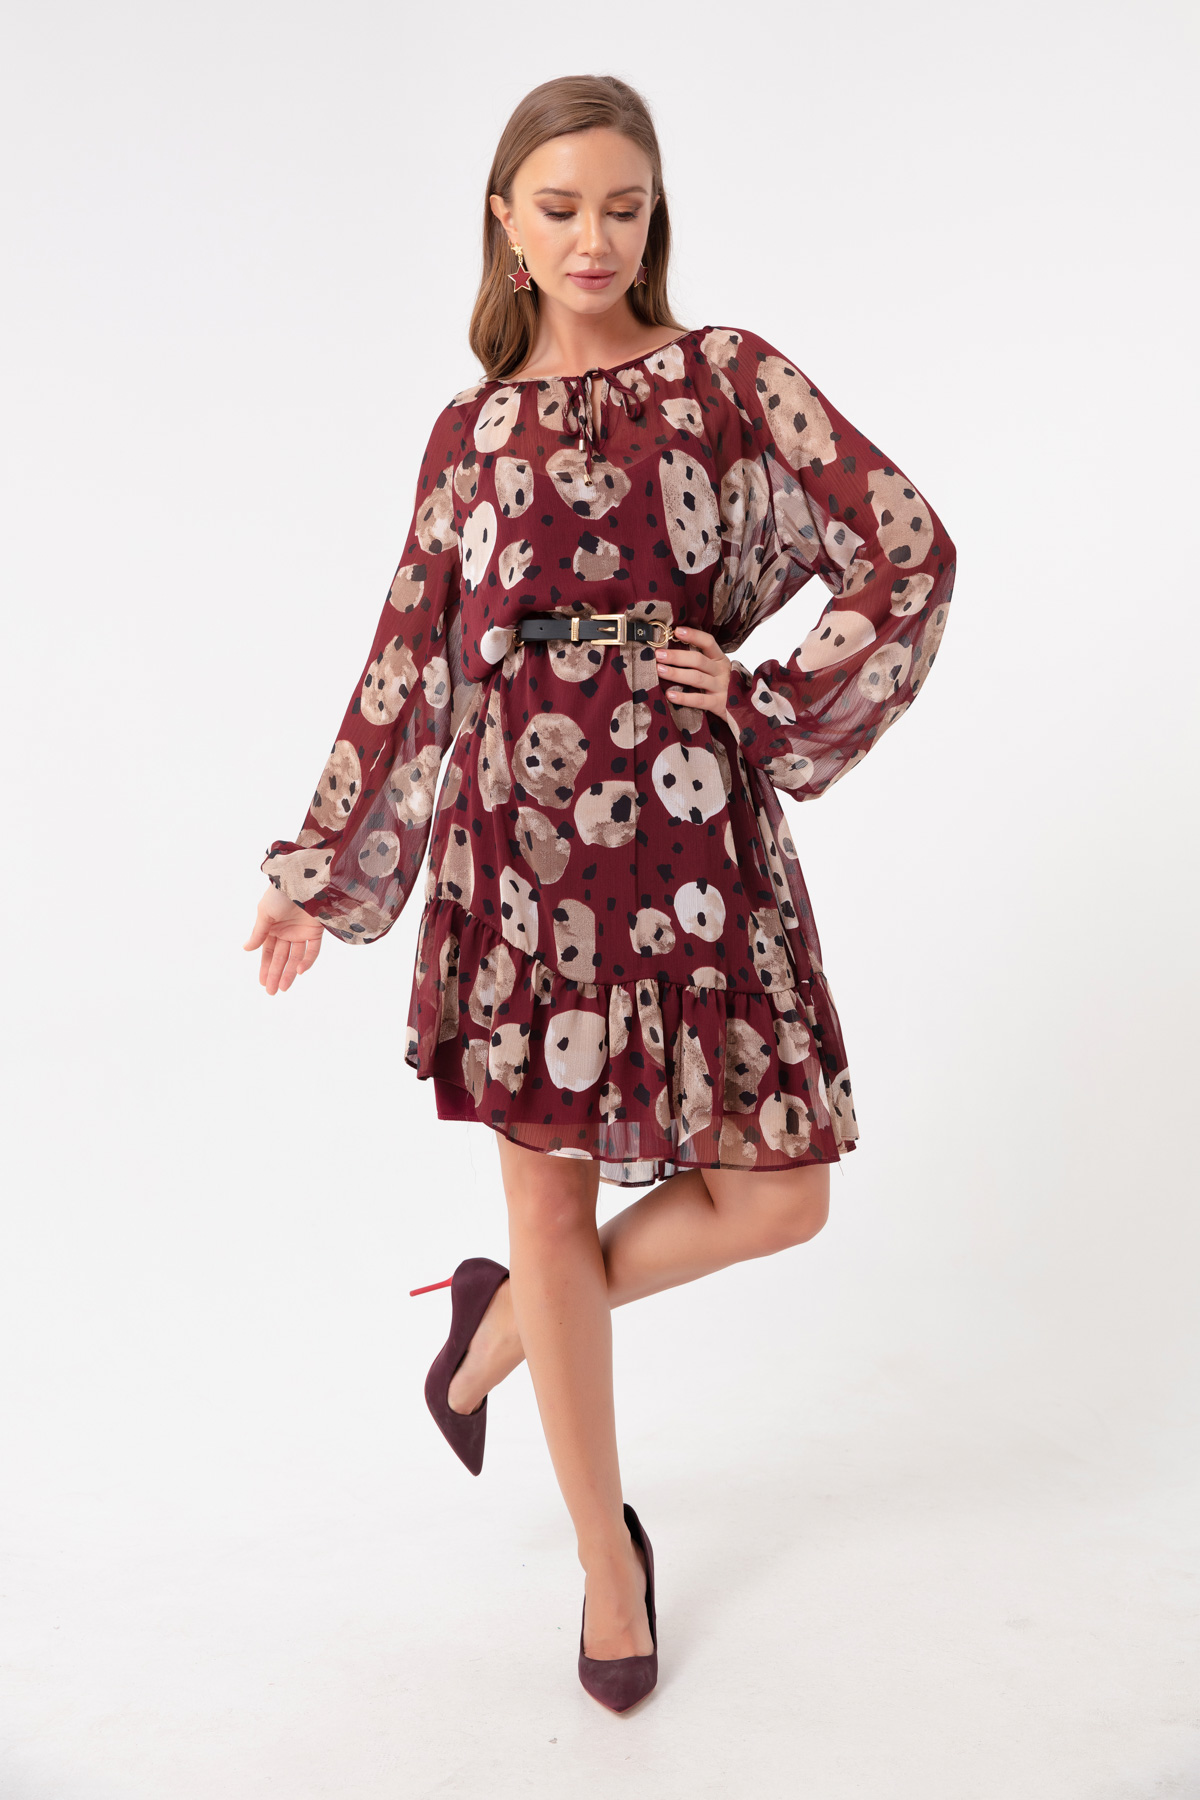 Women's Burgundy Patterned Dress